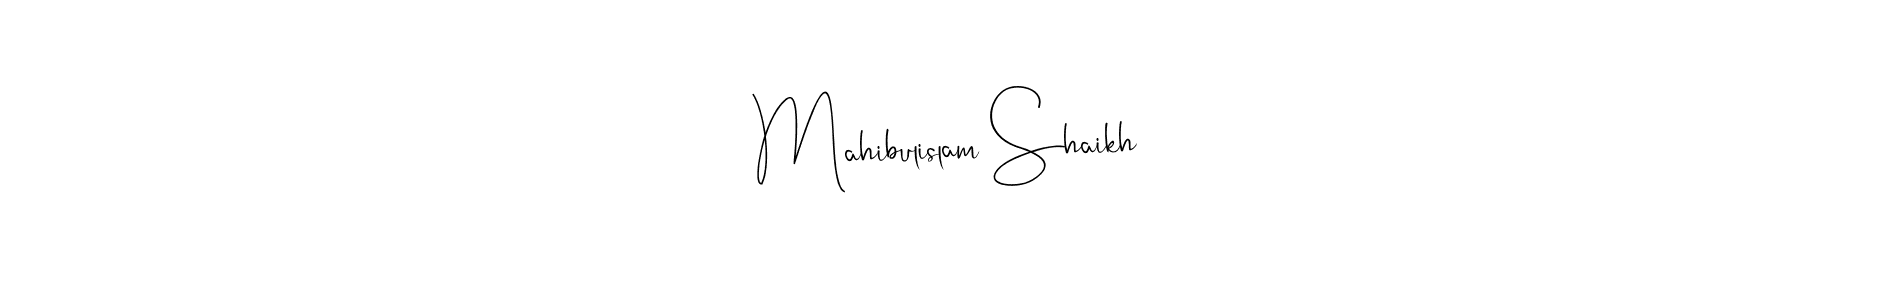 How to Draw Mahibulislam Shaikh signature style? Andilay-7BmLP is a latest design signature styles for name Mahibulislam Shaikh. Mahibulislam Shaikh signature style 4 images and pictures png